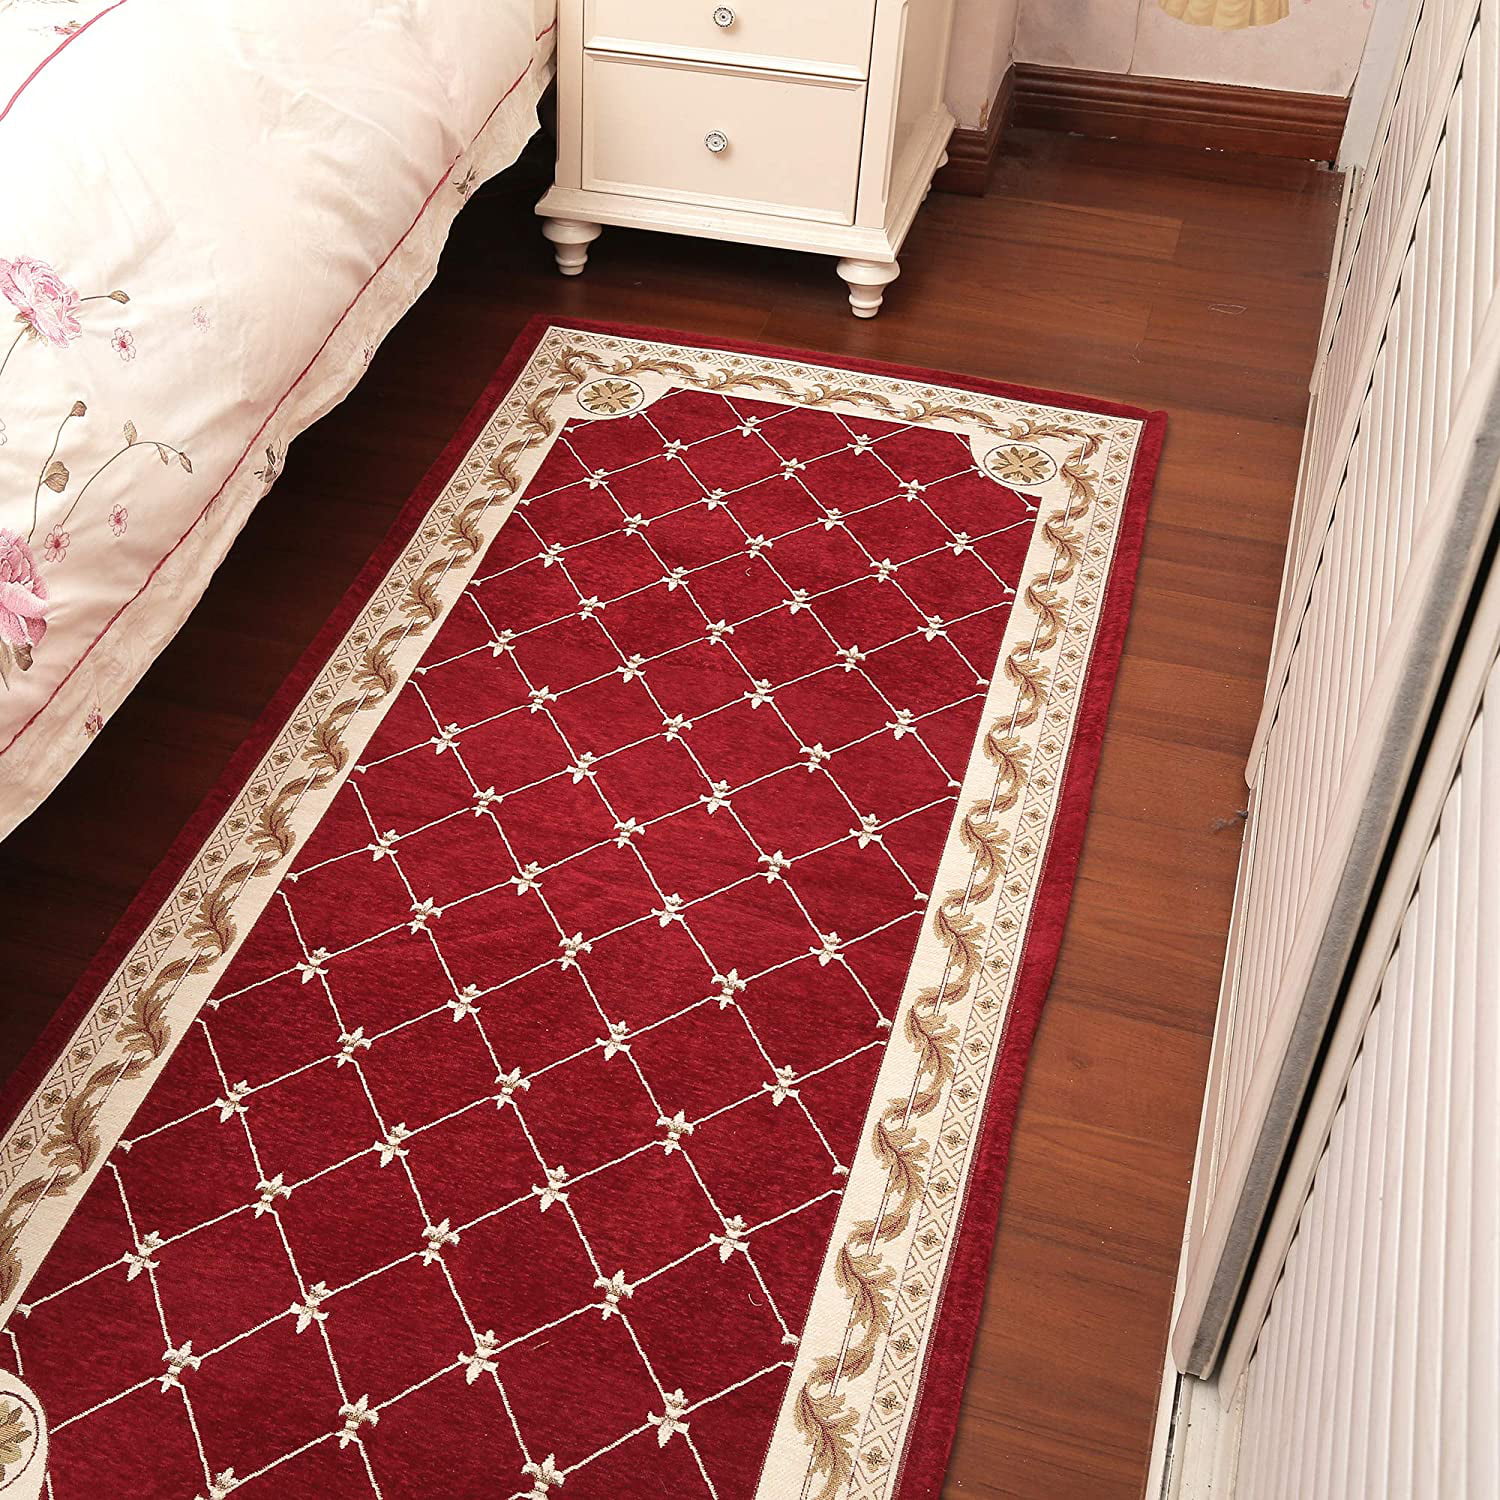 KEYAMA Non-Slip Home Kitchen Floor Comfort Mats kitchen area rug Fashion Doormat 